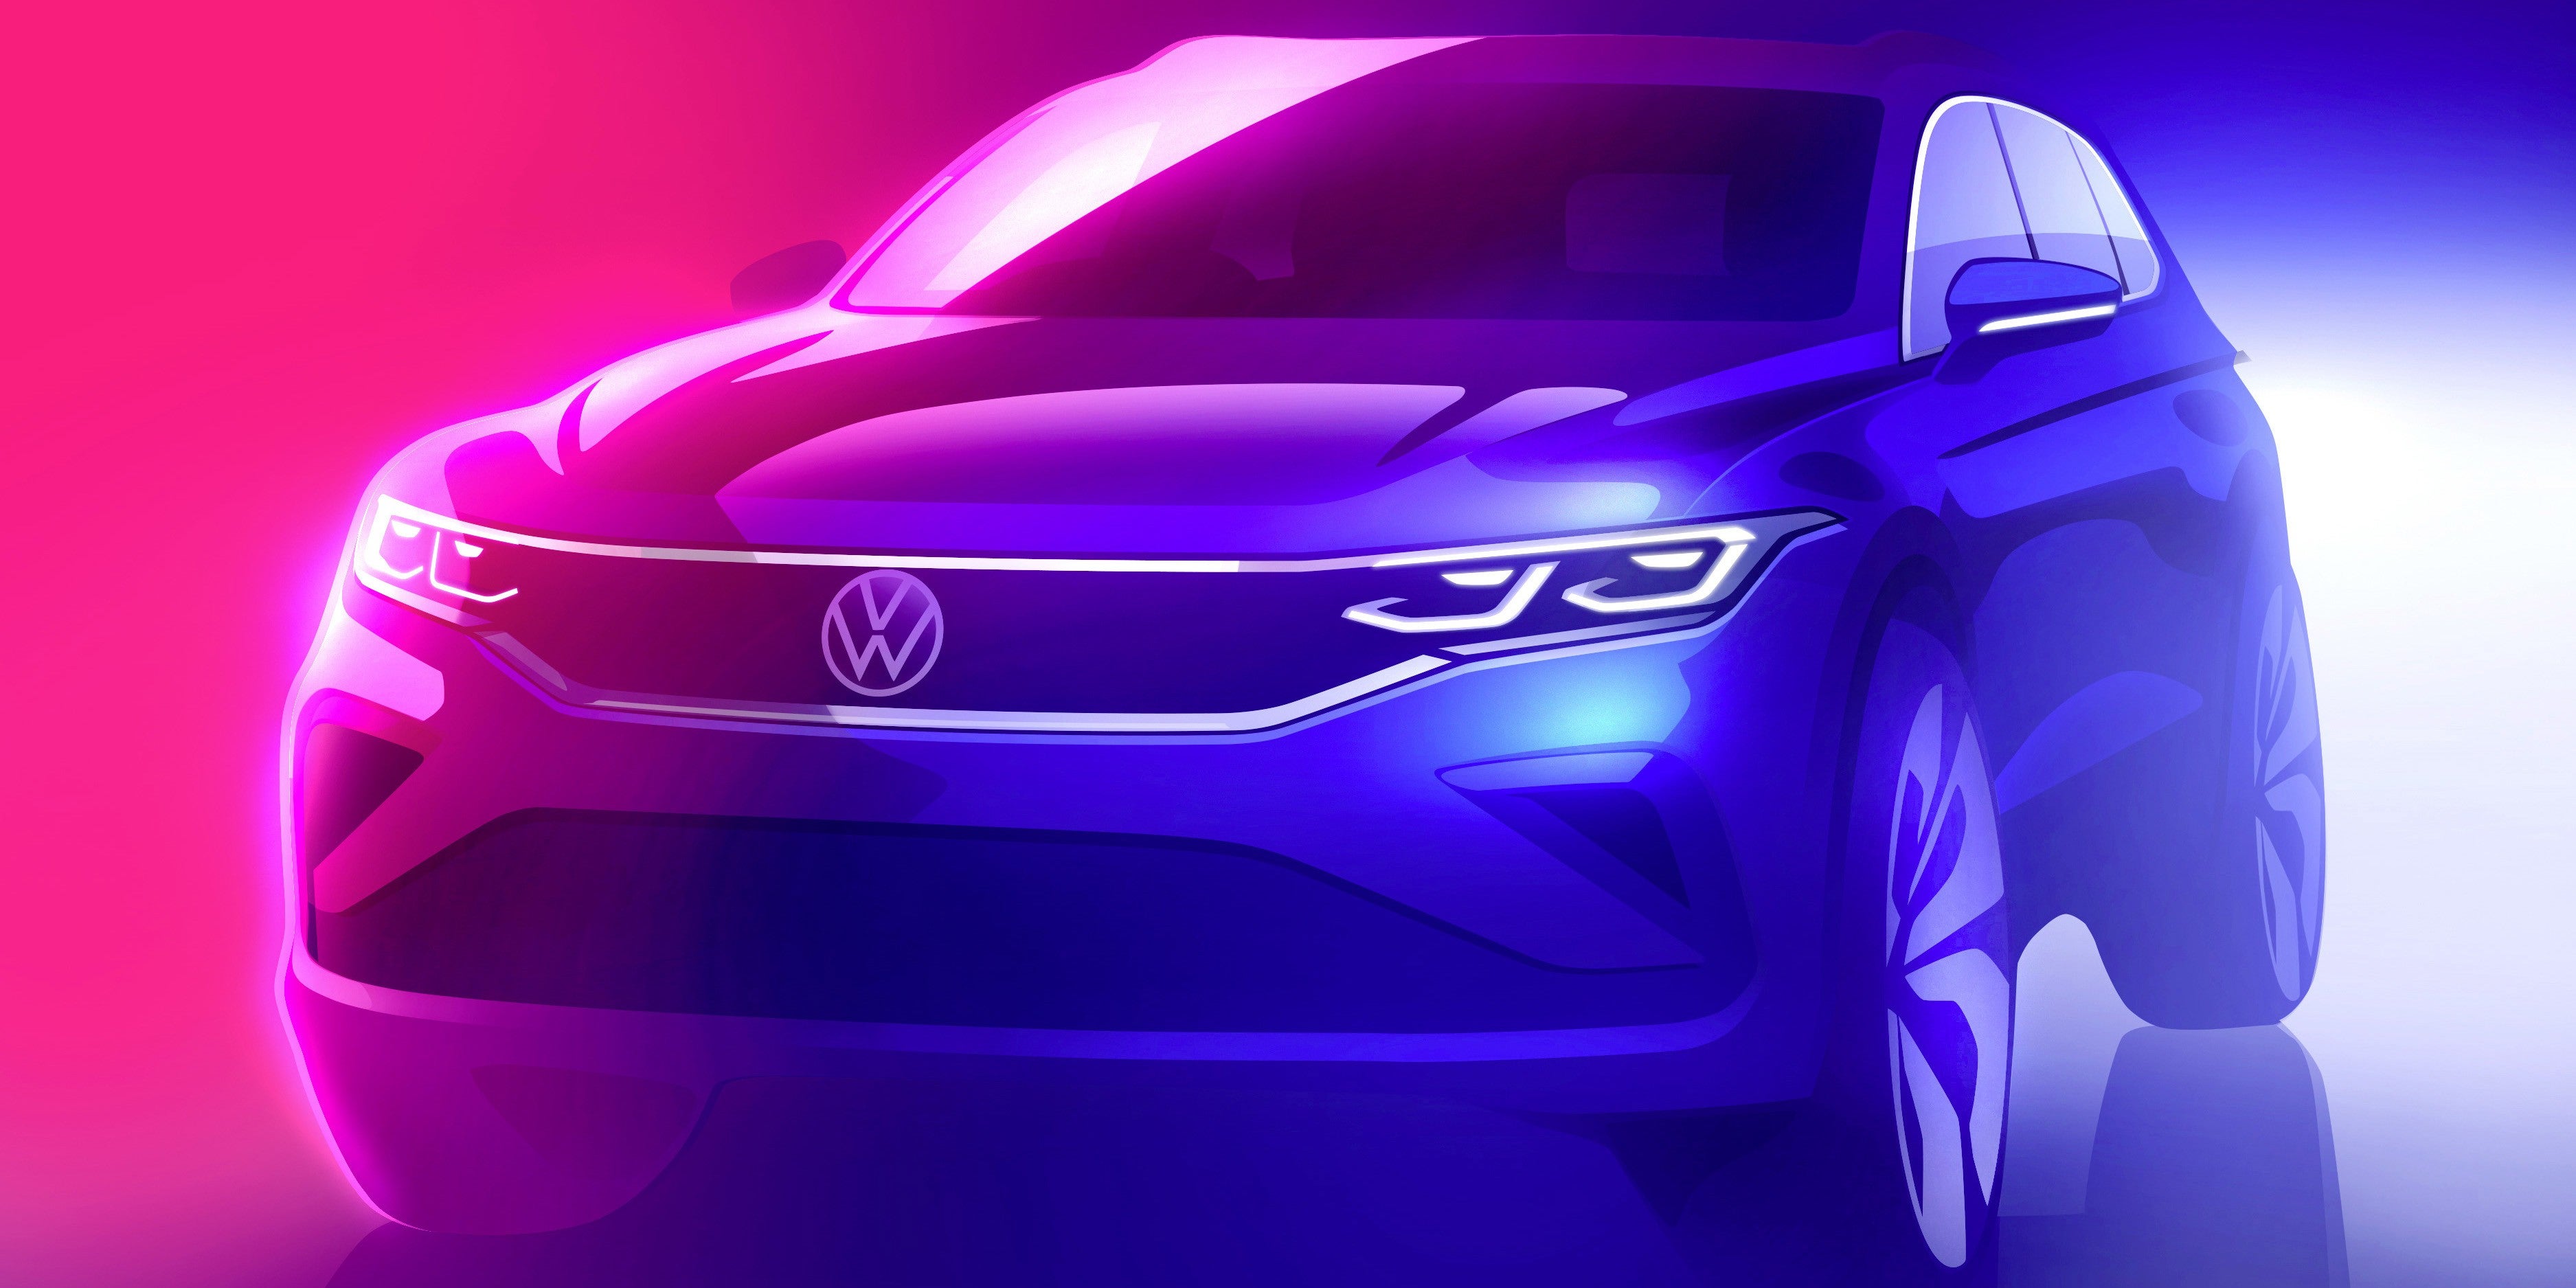 Volkswagen Releases First Teaser Image For Facelifted Tiguan Vw